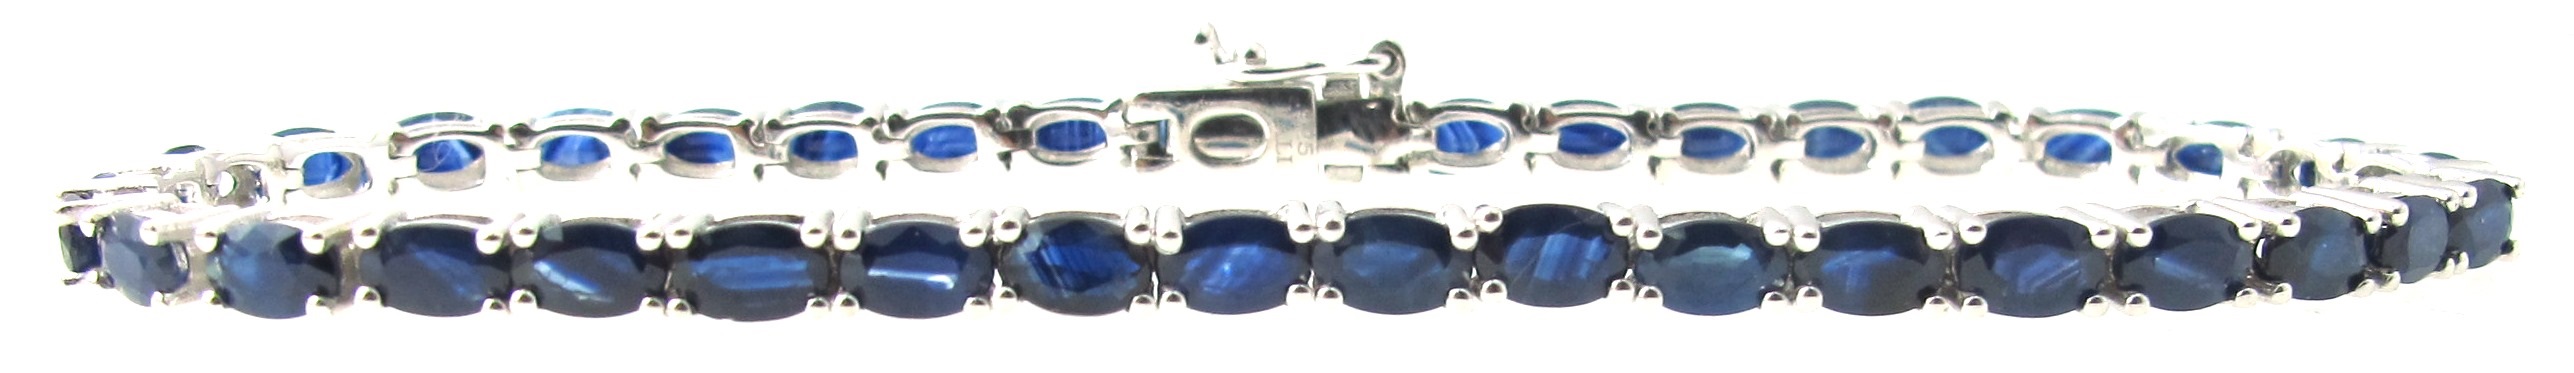 Lali Sterling Silver Blue Sapphire Bracelet